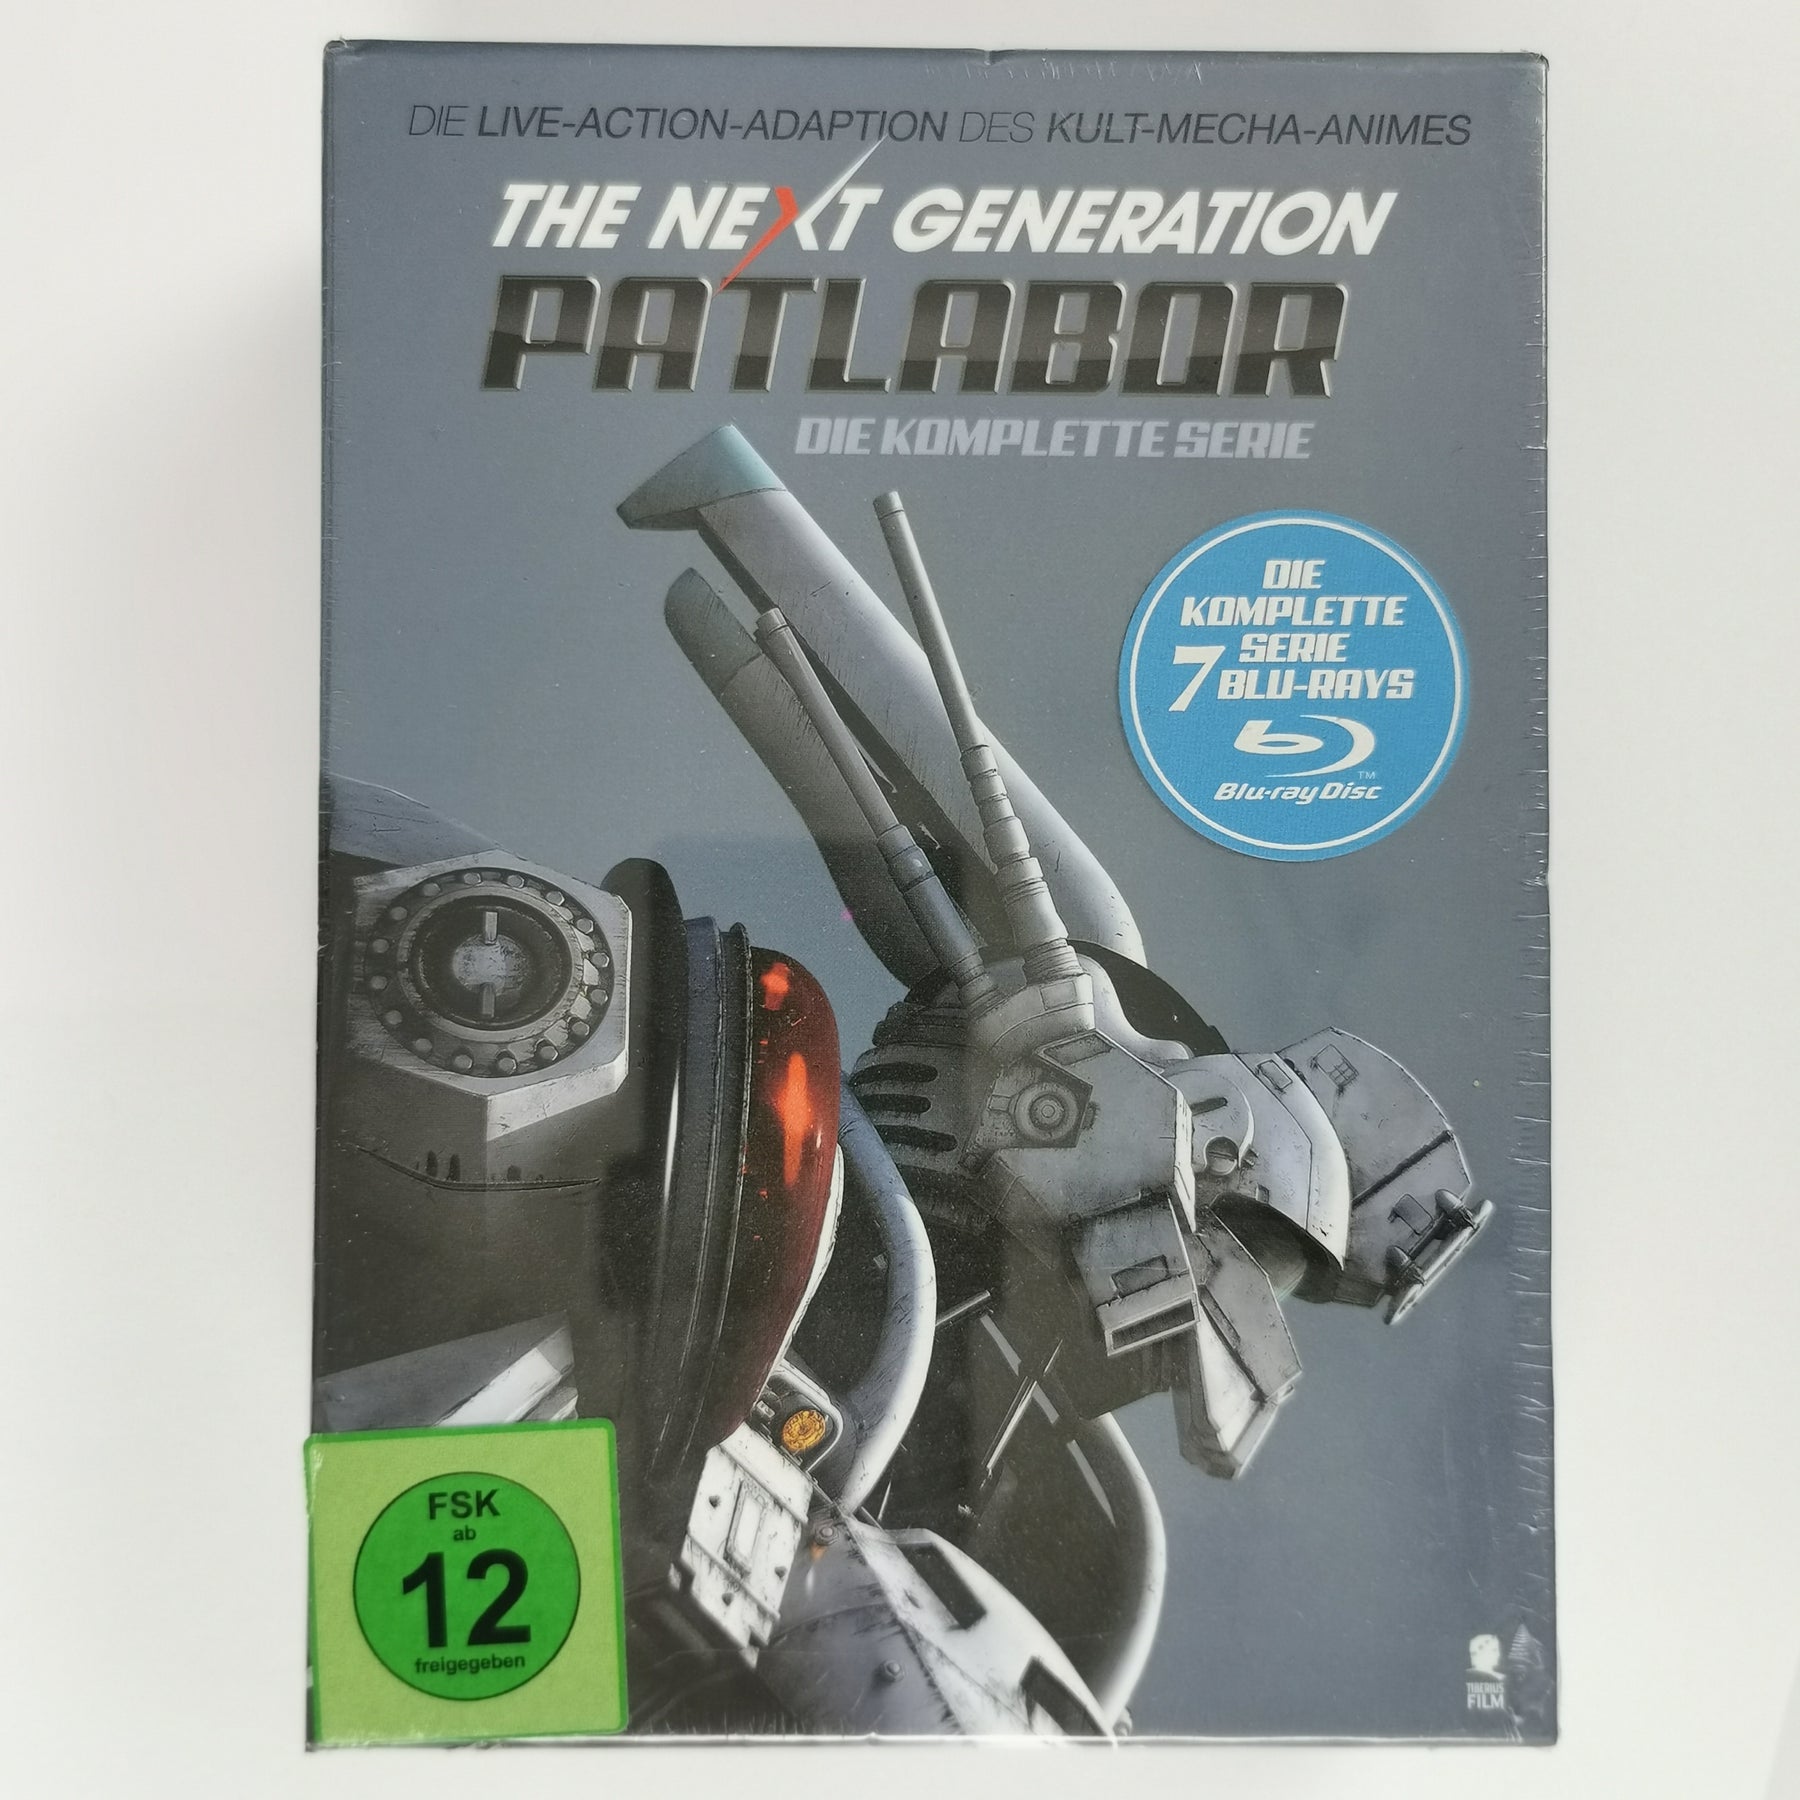 The Next Generation Patlabor  [Blu ray]